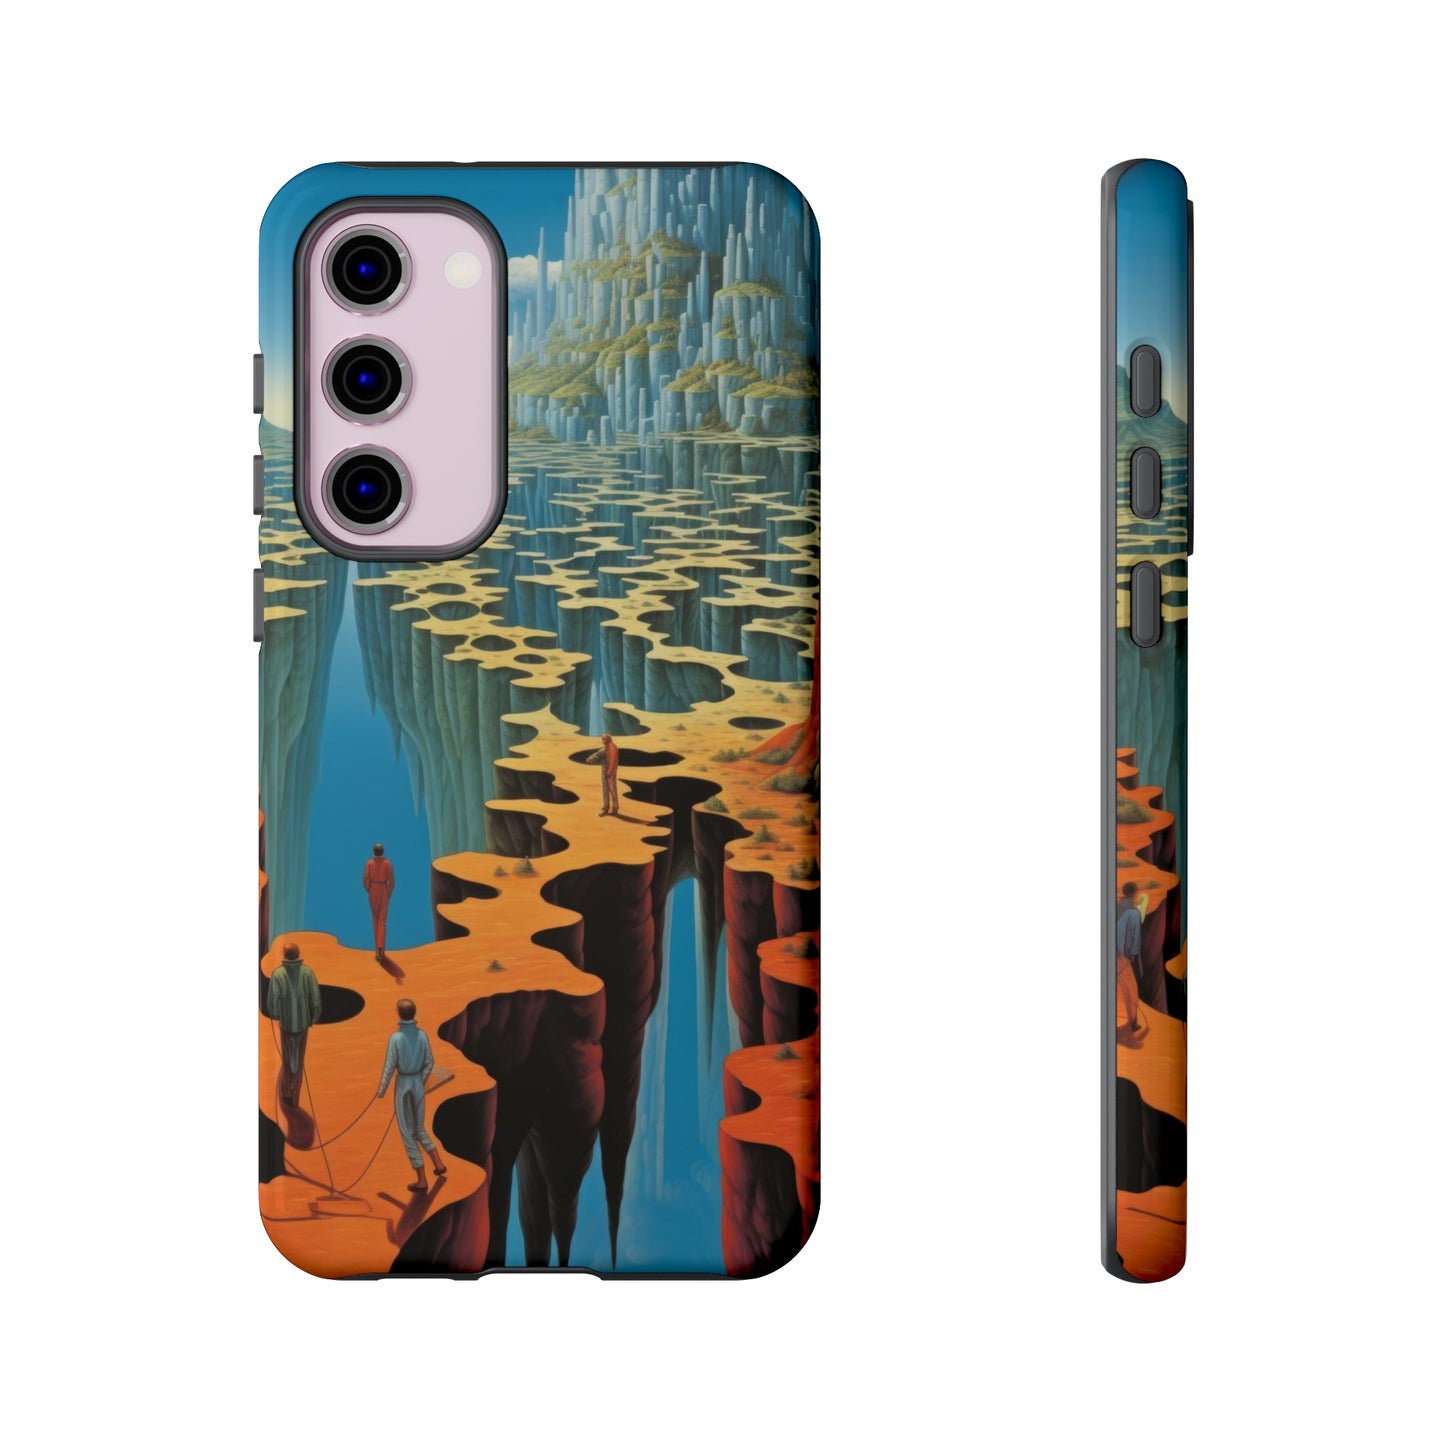 Skyward Sanctuary: Voronoi-Patterned Floating Land Phone Case for iPhone, Samsung, Pixel